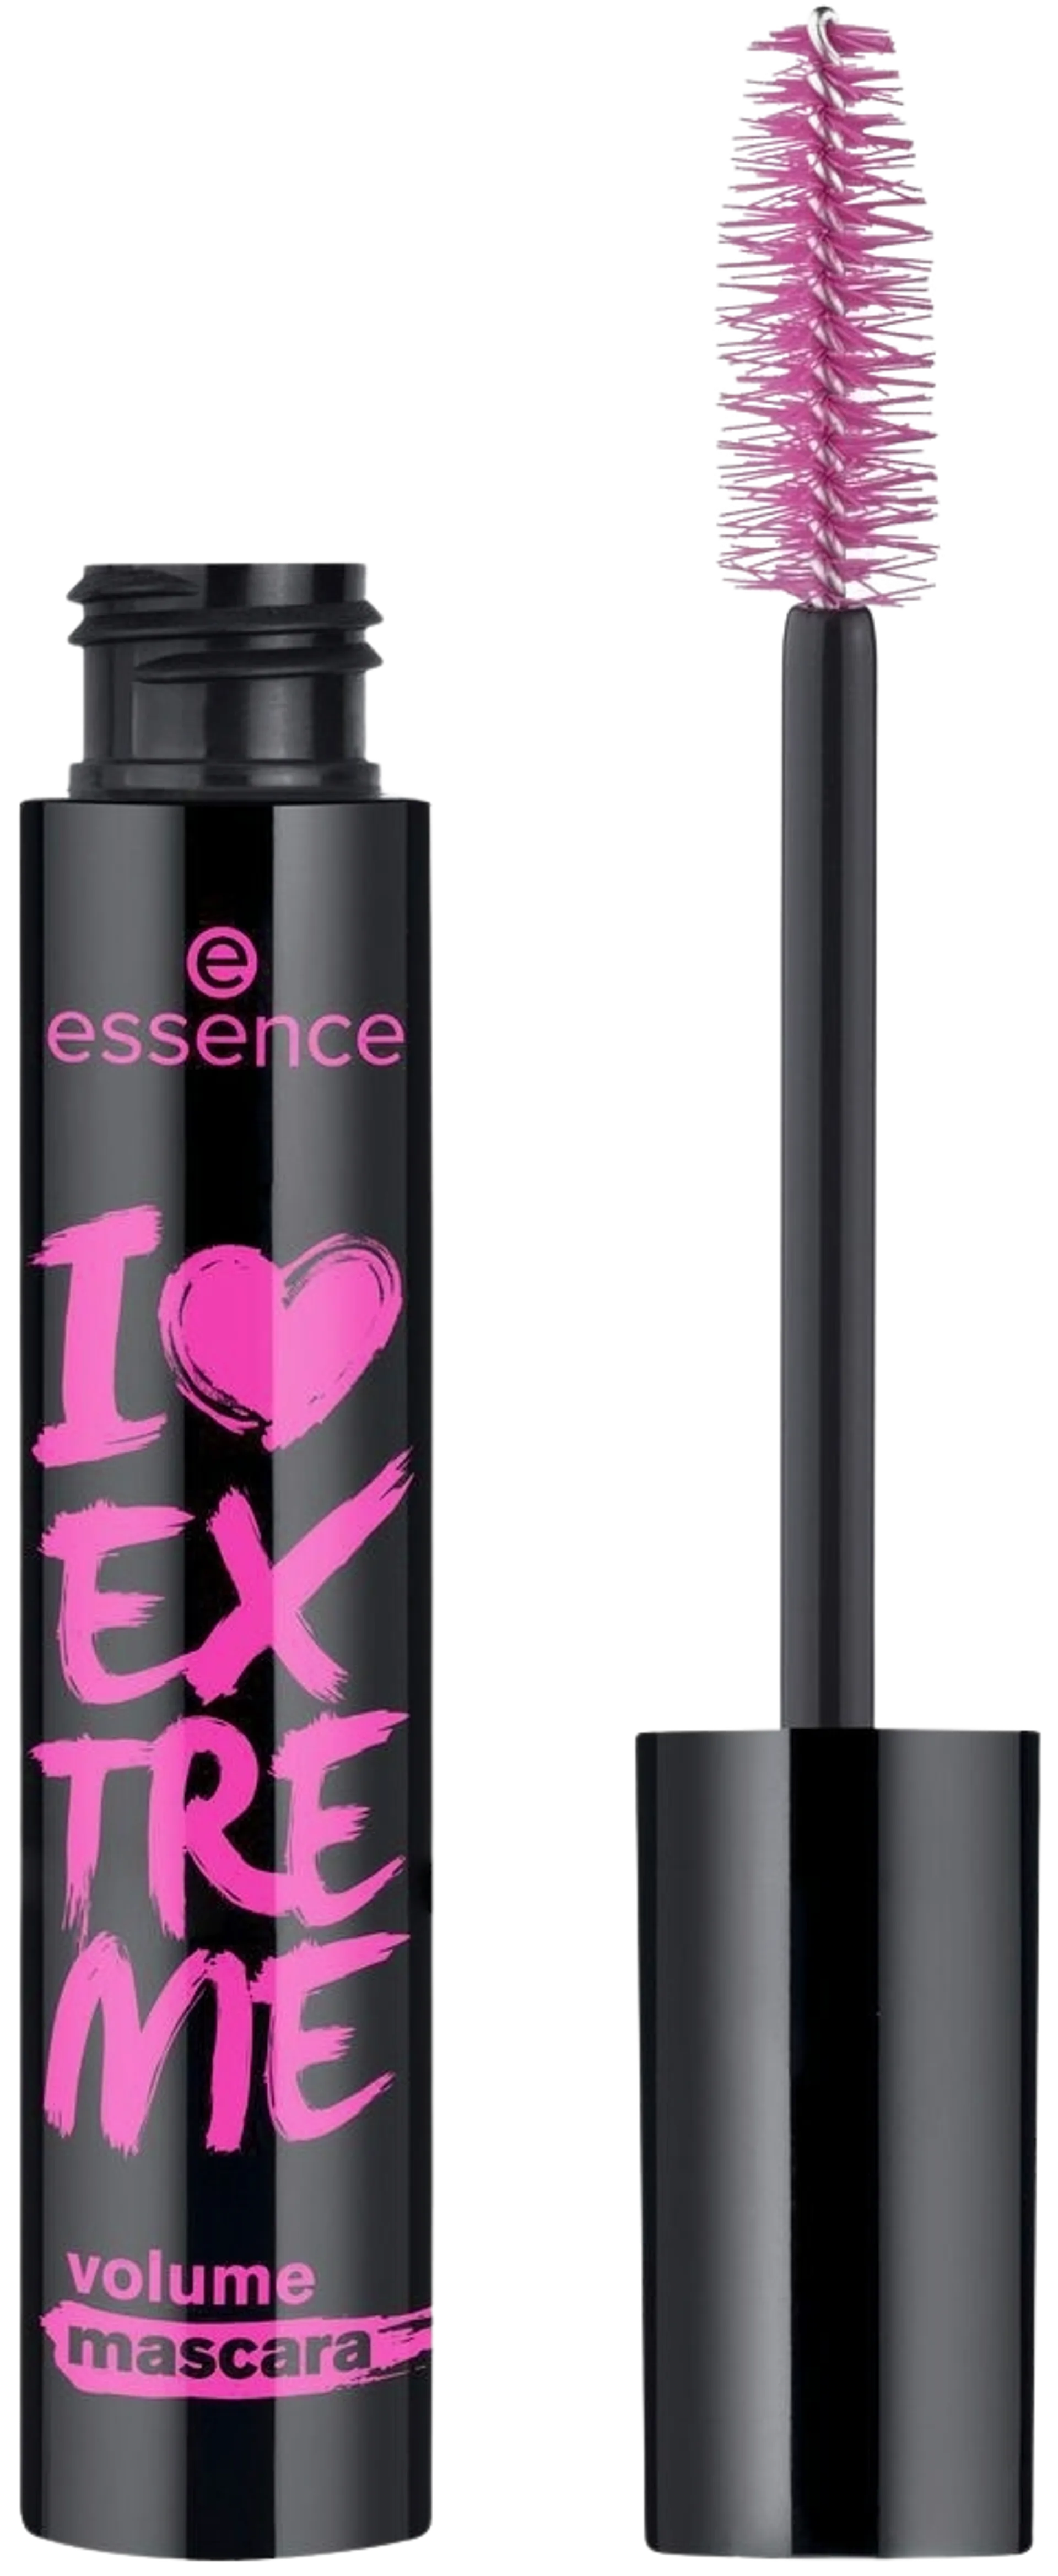 essence I LOVE EXTREME volume mascara 12 ml - 1